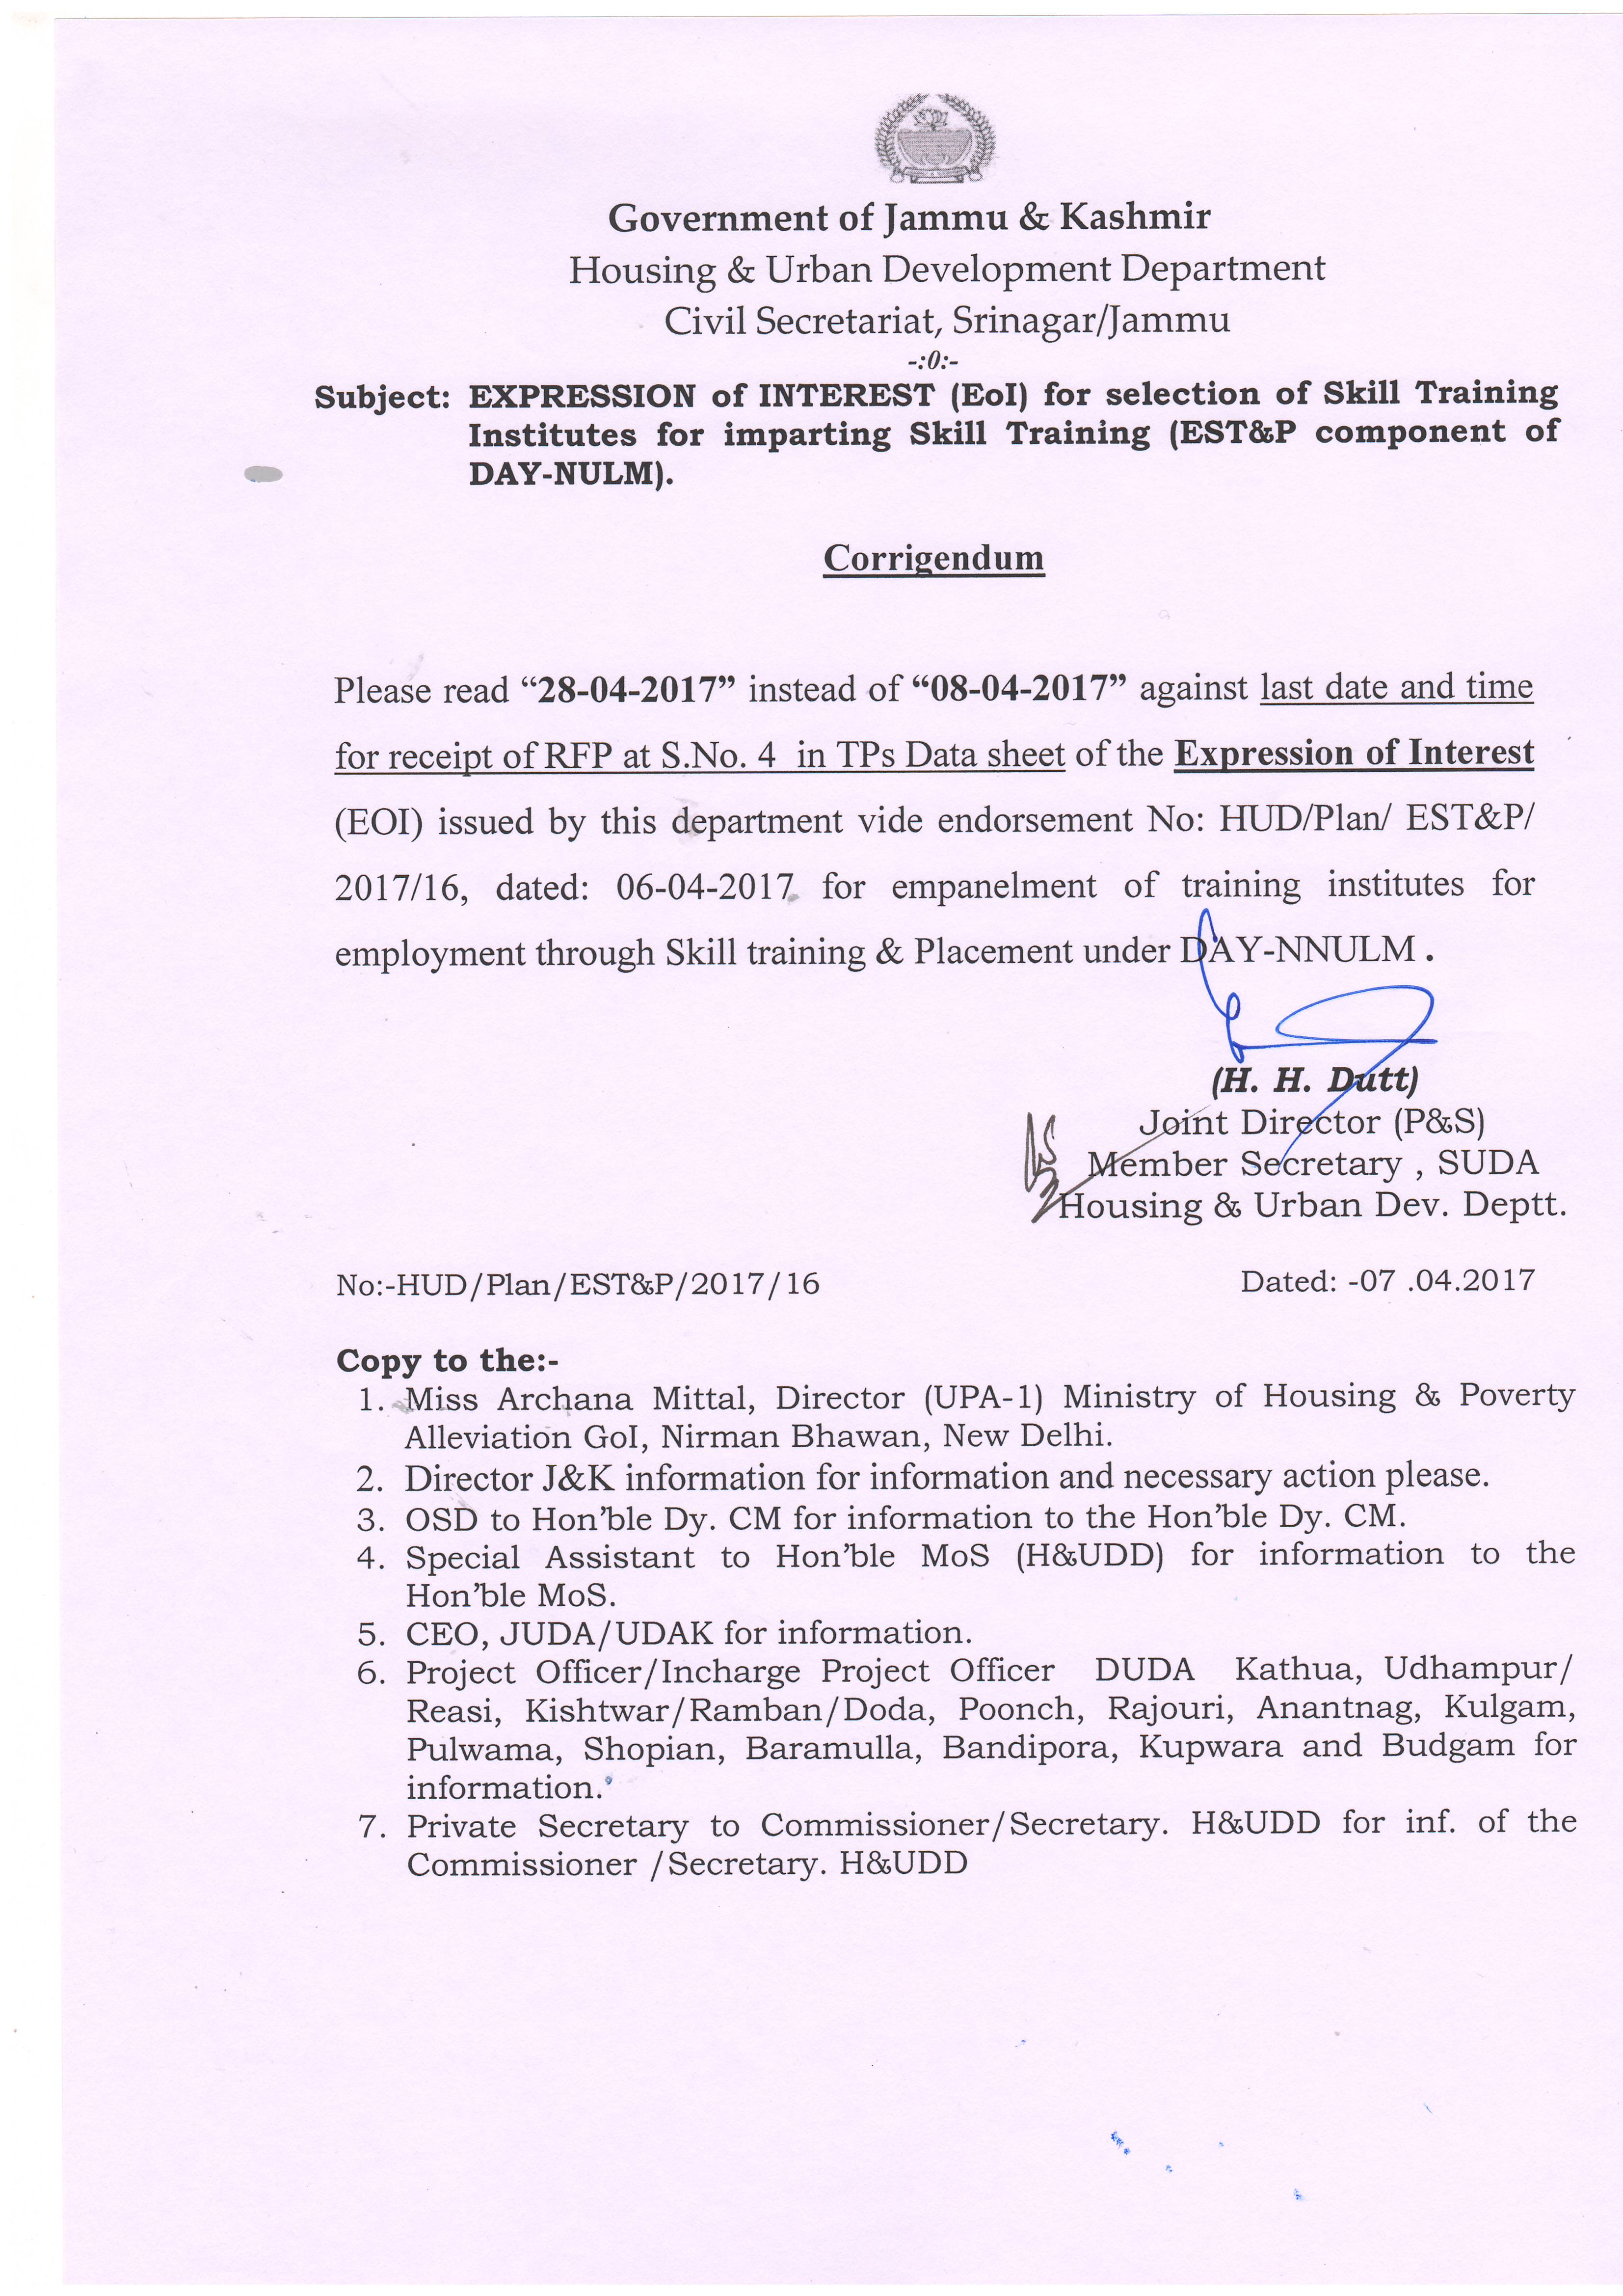 Housing And Urban Development Department Government Of Jammu Kashmir